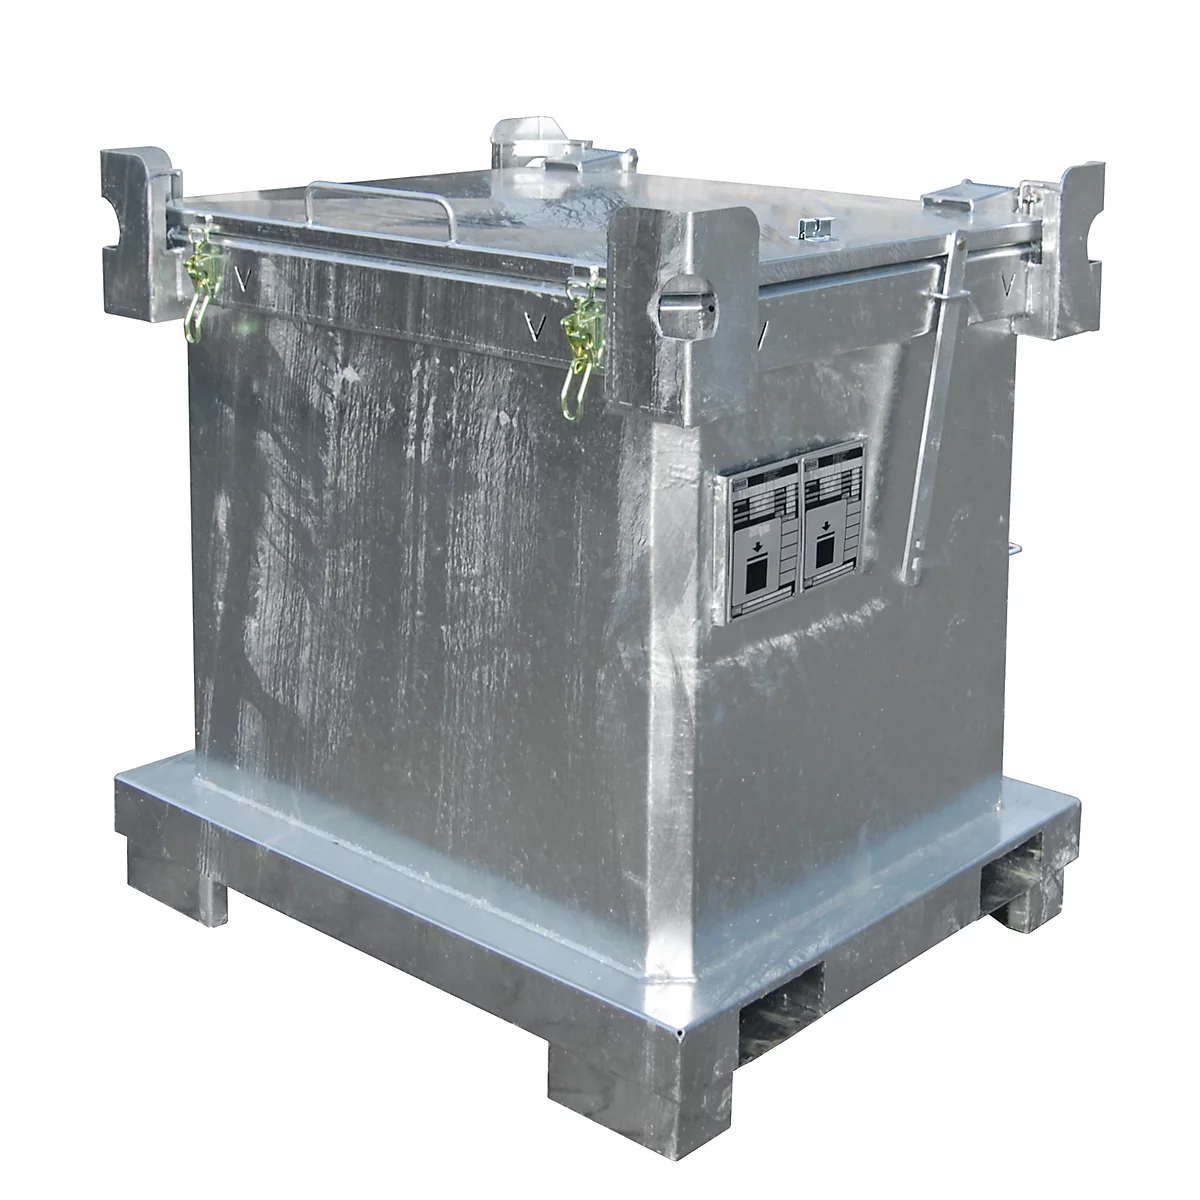 Contenedor para residuos especiales BAUER SAP 800-3, chapa de acero, galvanizado en caliente, apilable, An 1200 x P 1000 x Al 1053 mm